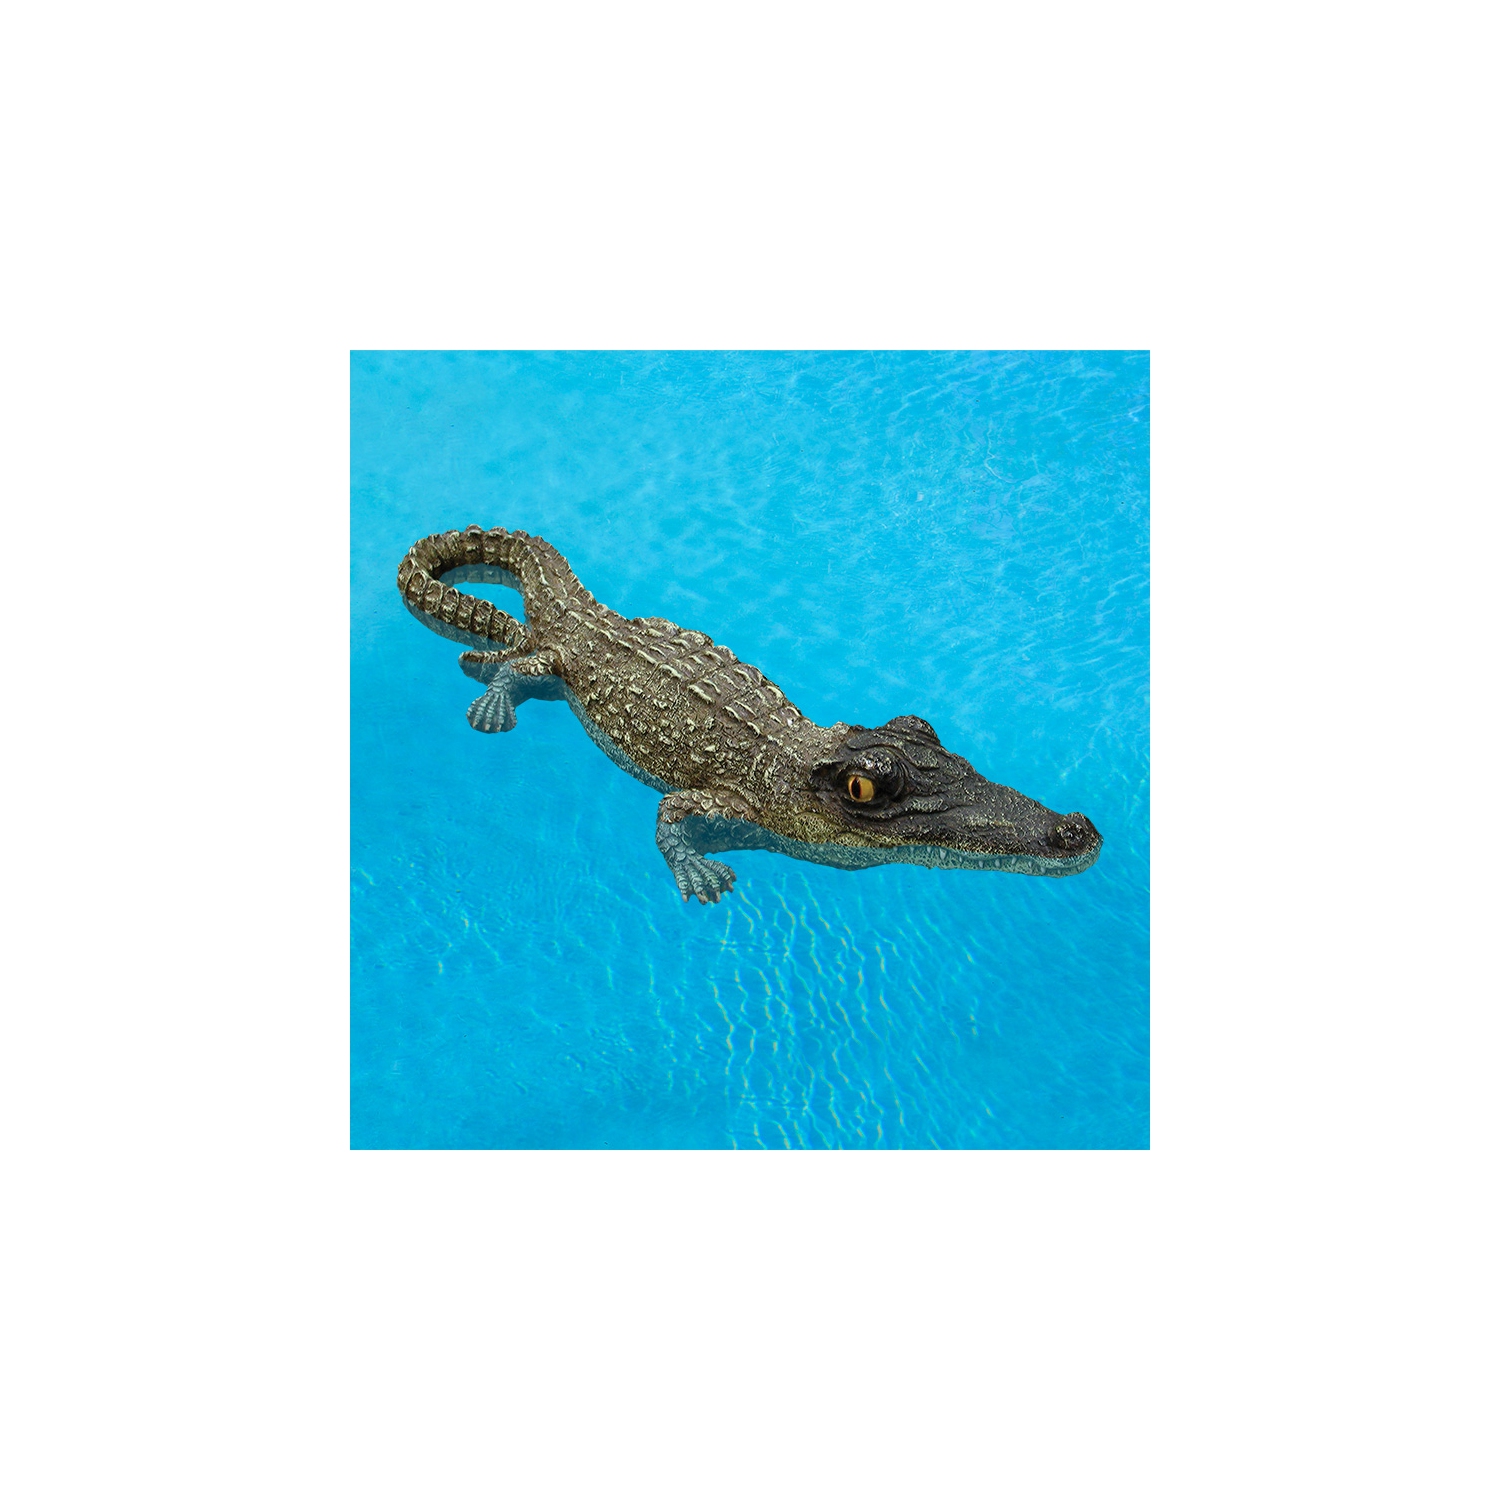 18 Baby Alligator Floating Pool, Spa or Patio Decorative Reptile Figure